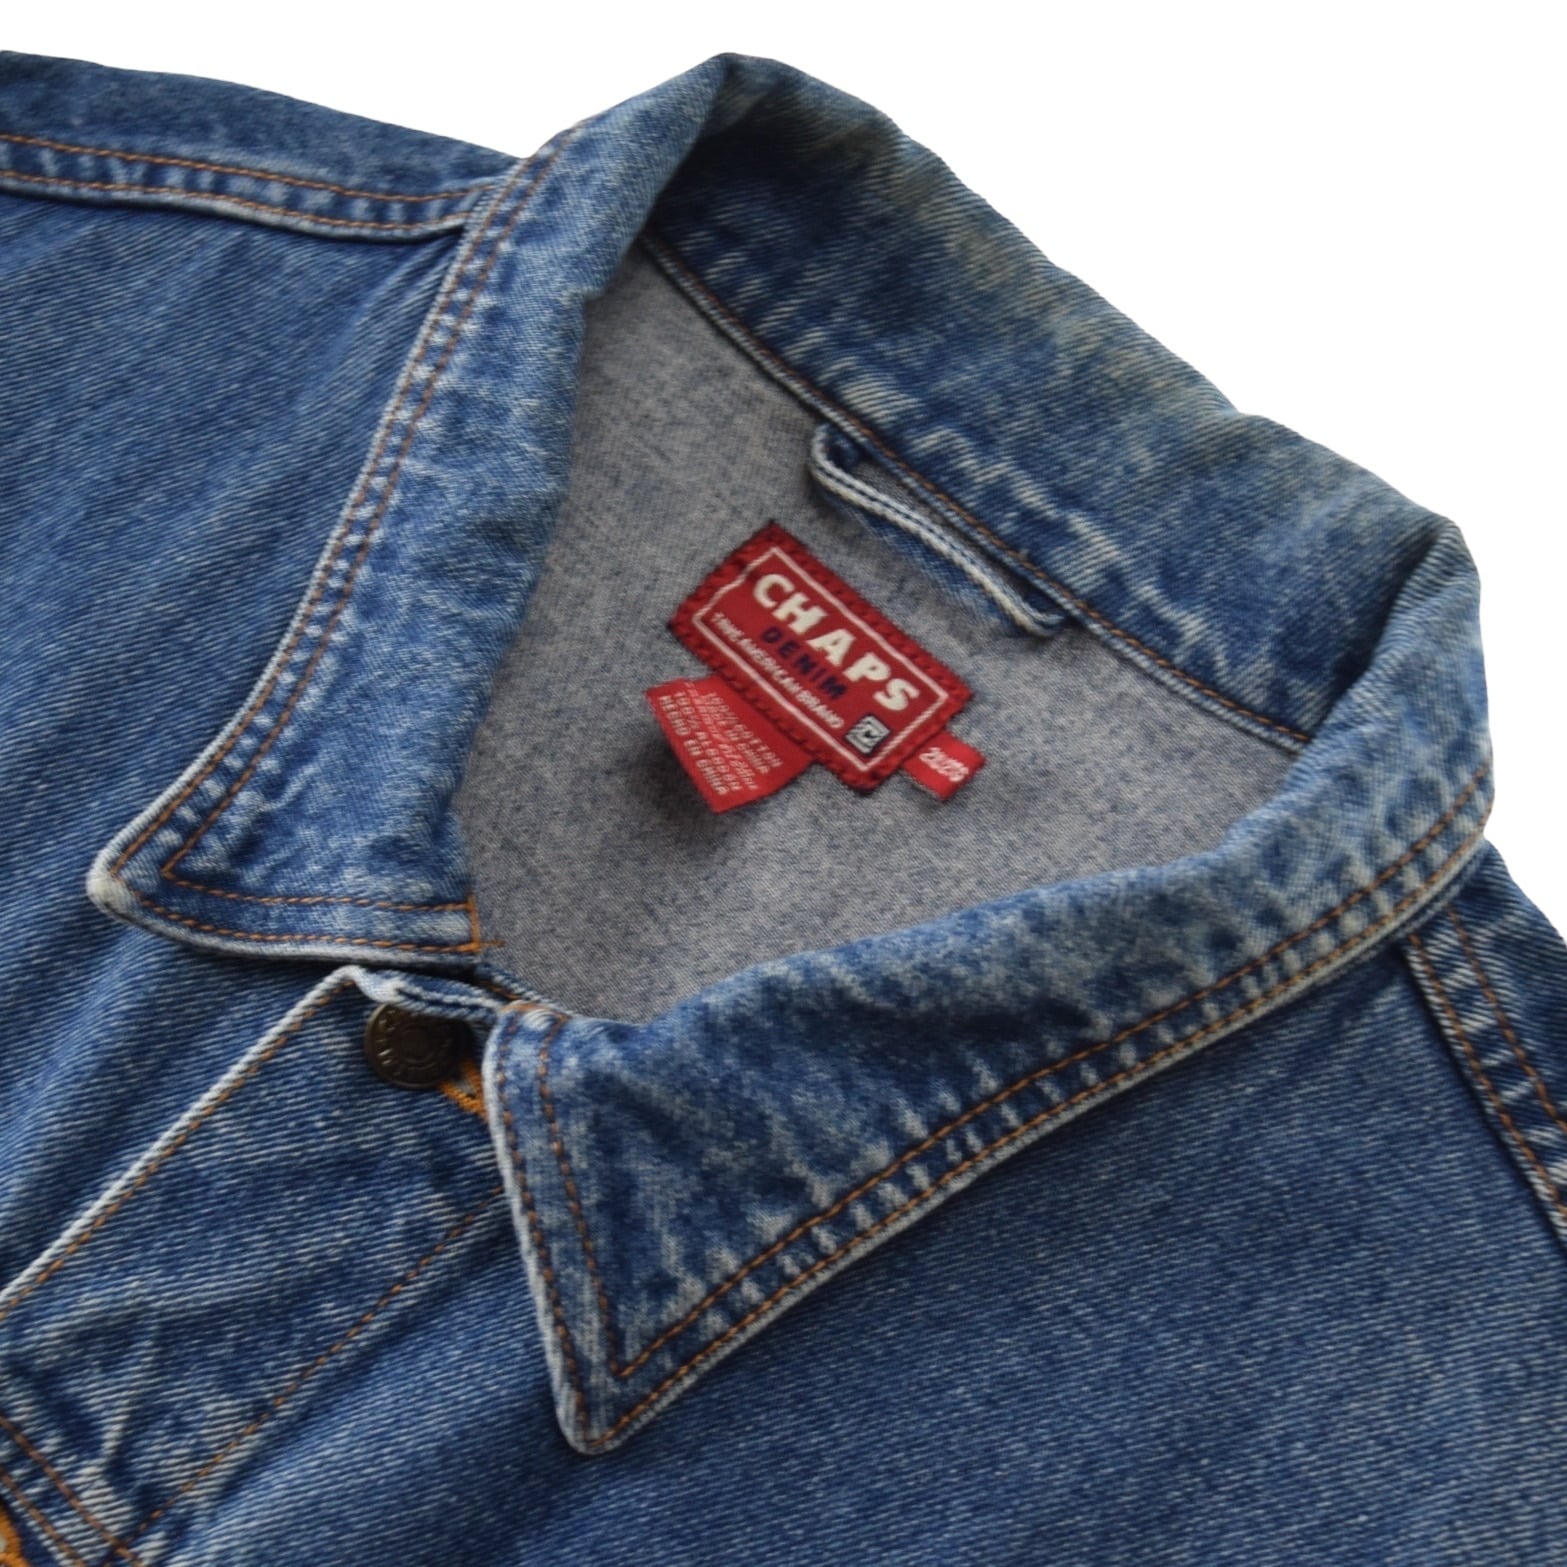 Vintage Ralph Lauren x Chaps jean denim trucker jacket | Chaps jeans,  Vintage jean jacket, Denim jeans